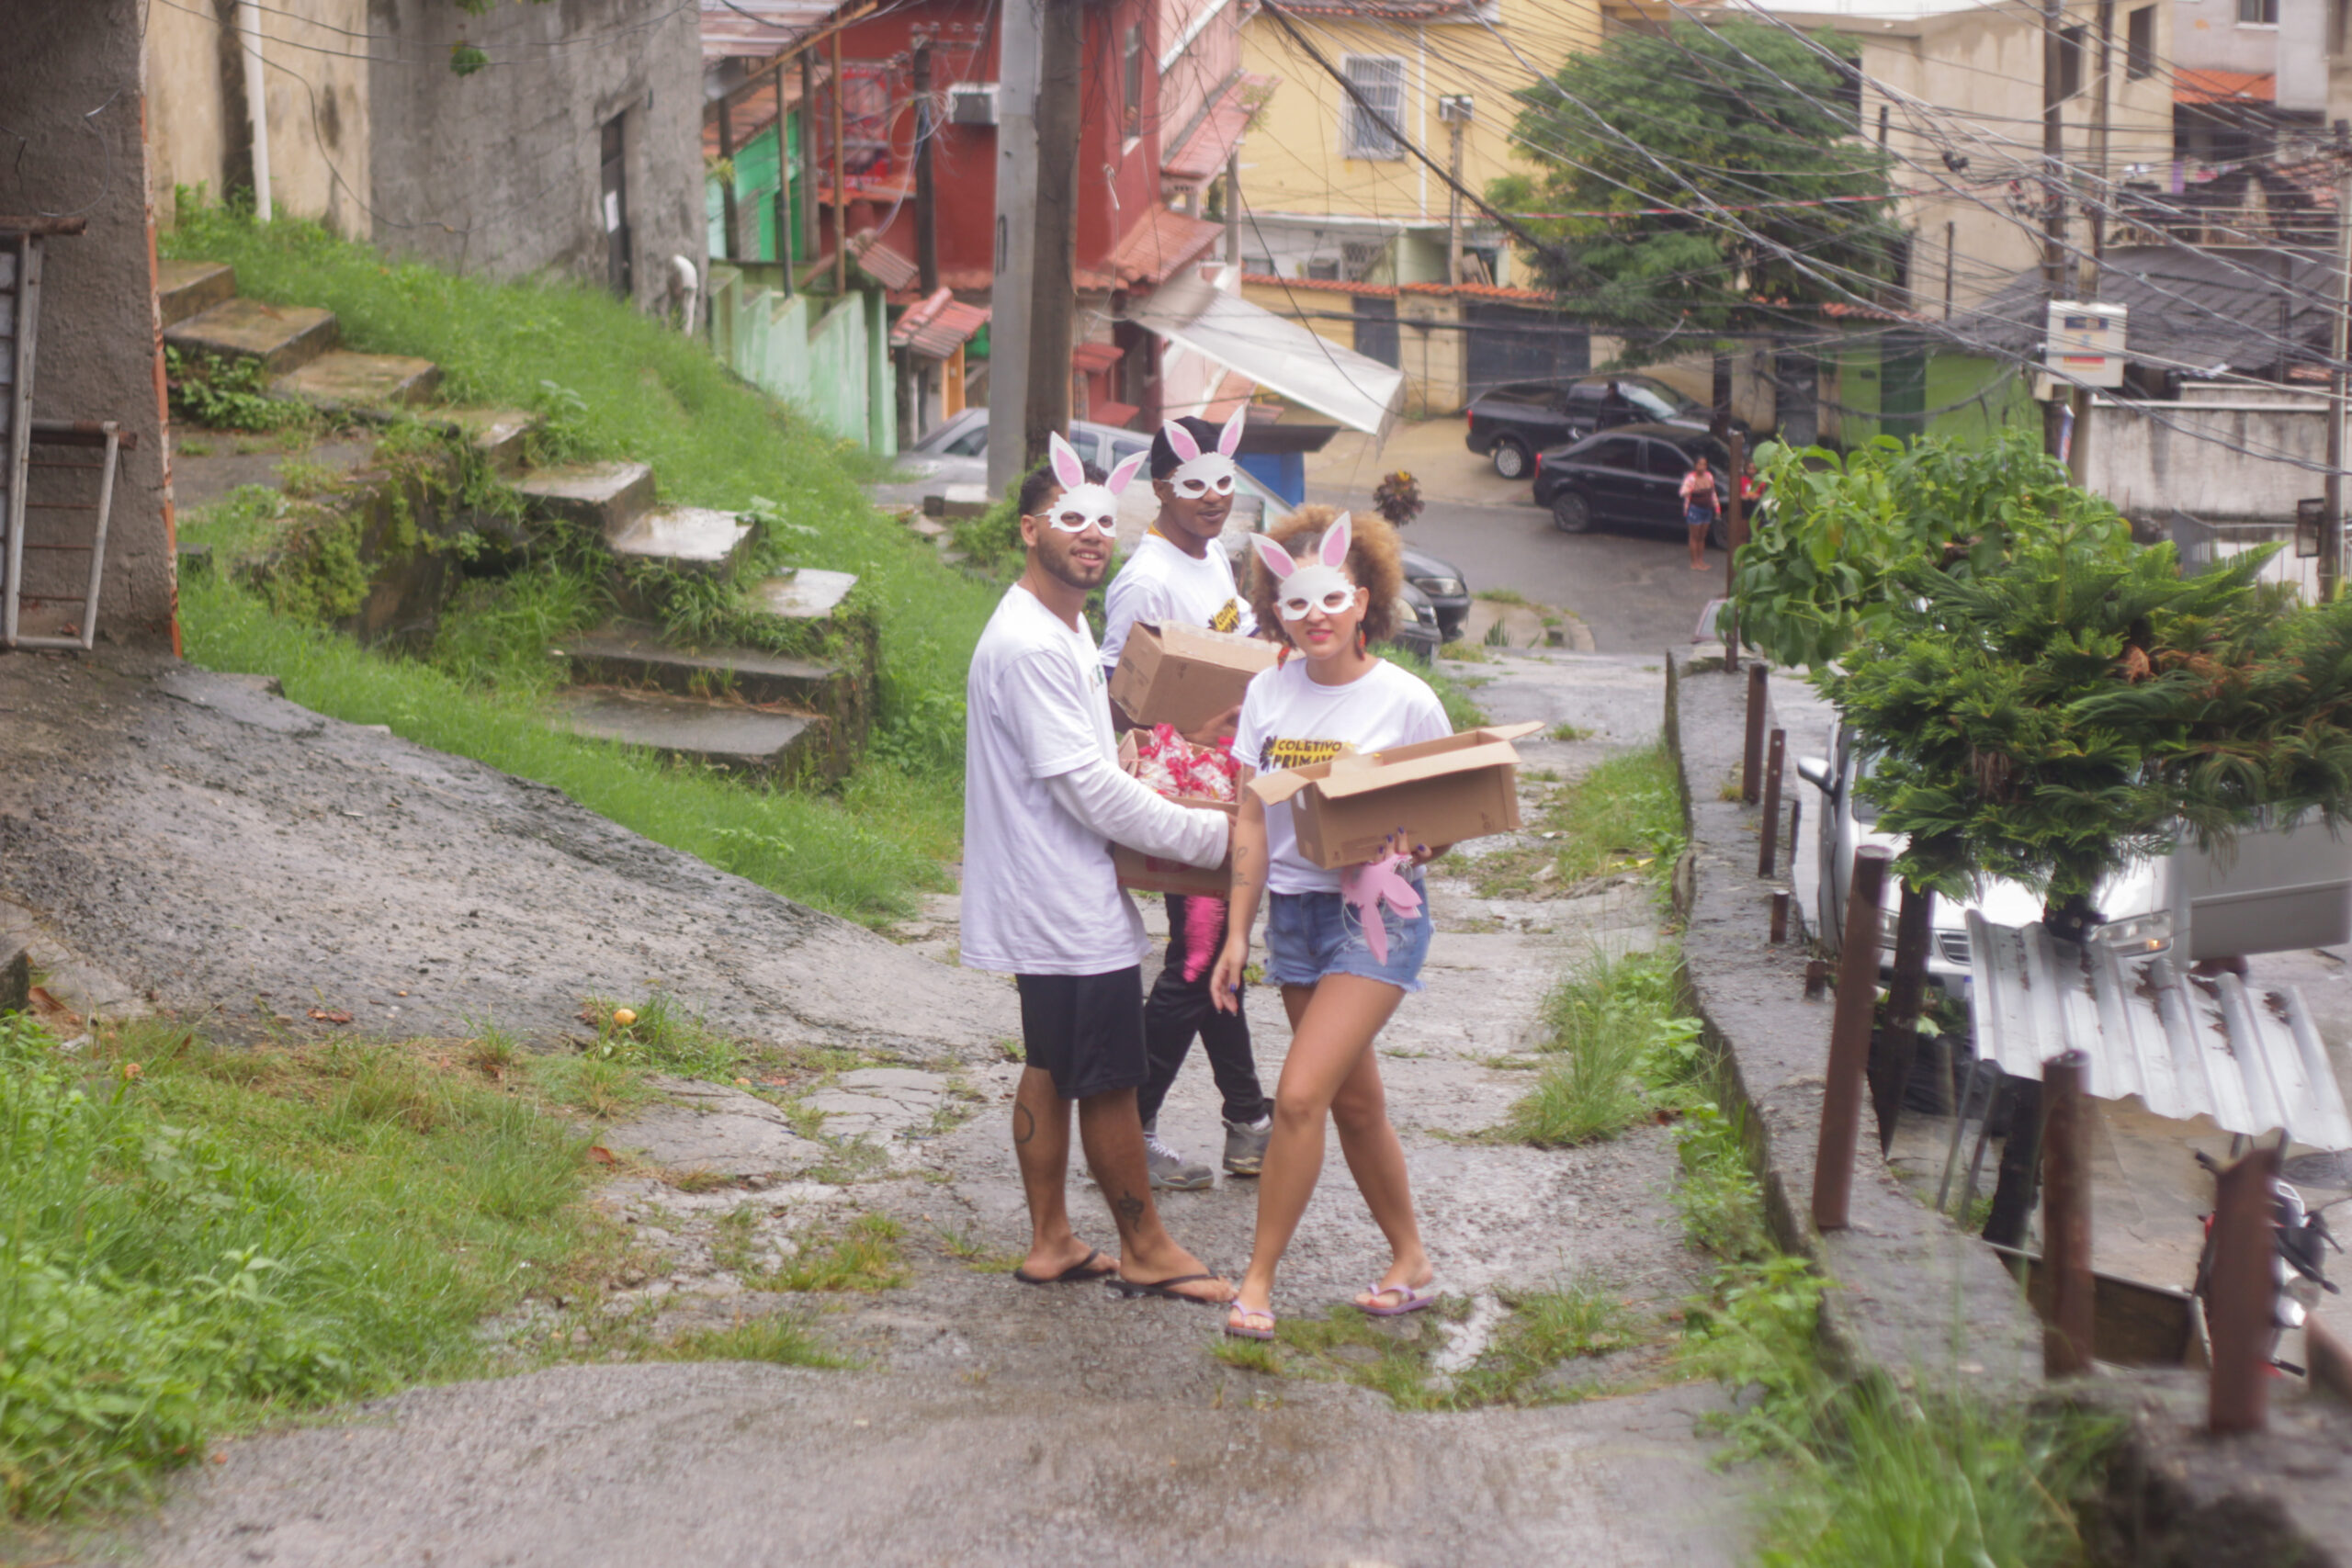 Matheus Fernando, Suellen Souza, and Daniel Mendes distributing chocolate kits. Photo: Vinícius Ribeiro